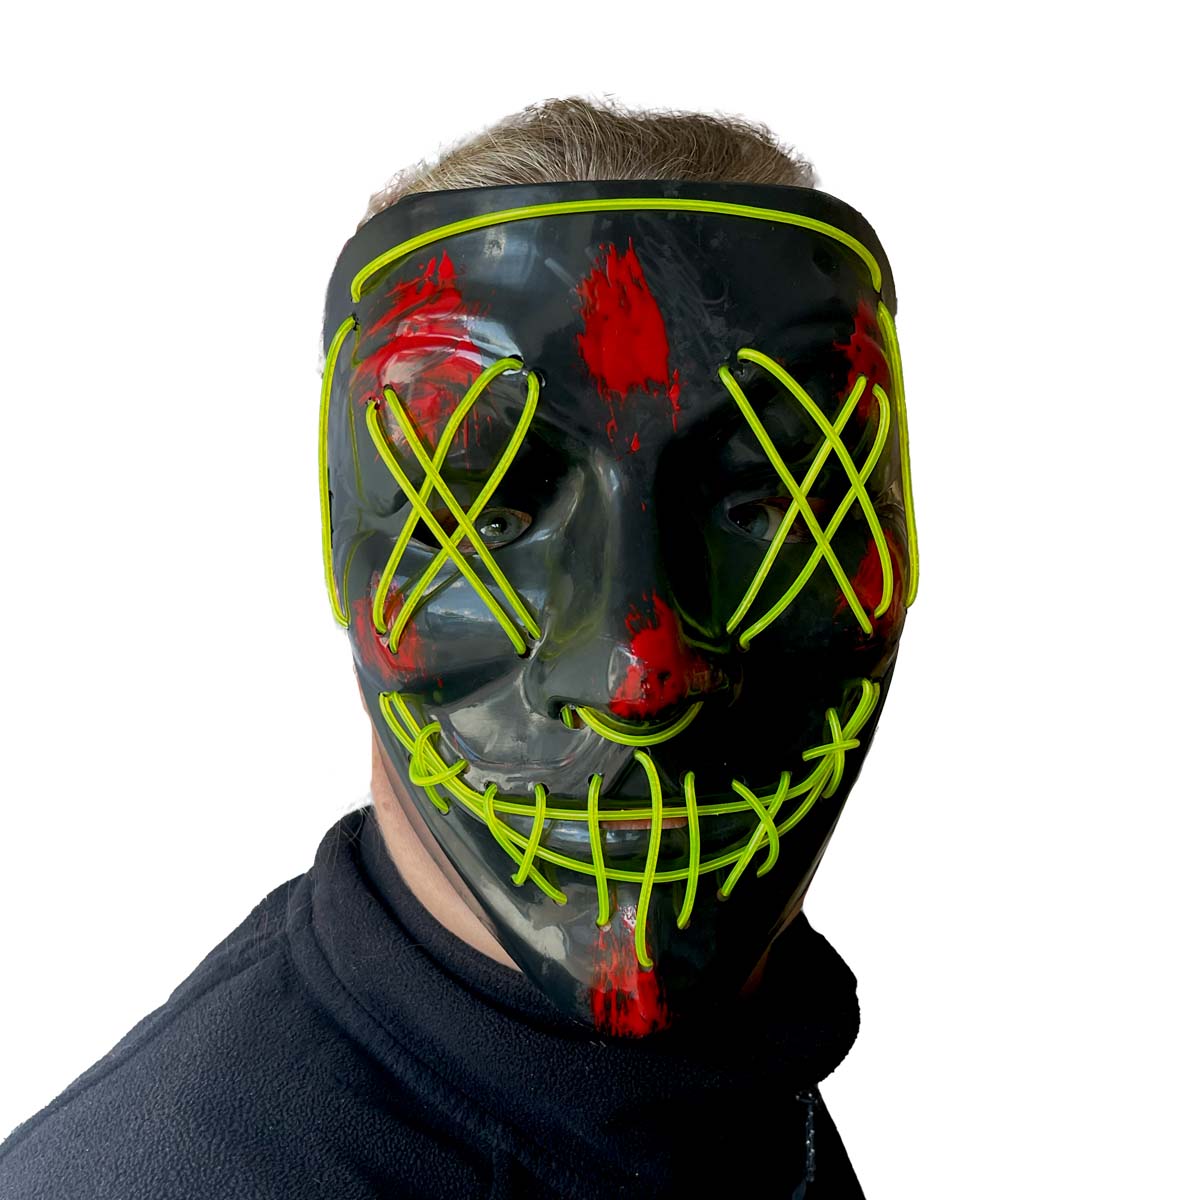 Mask svart med neon trådar